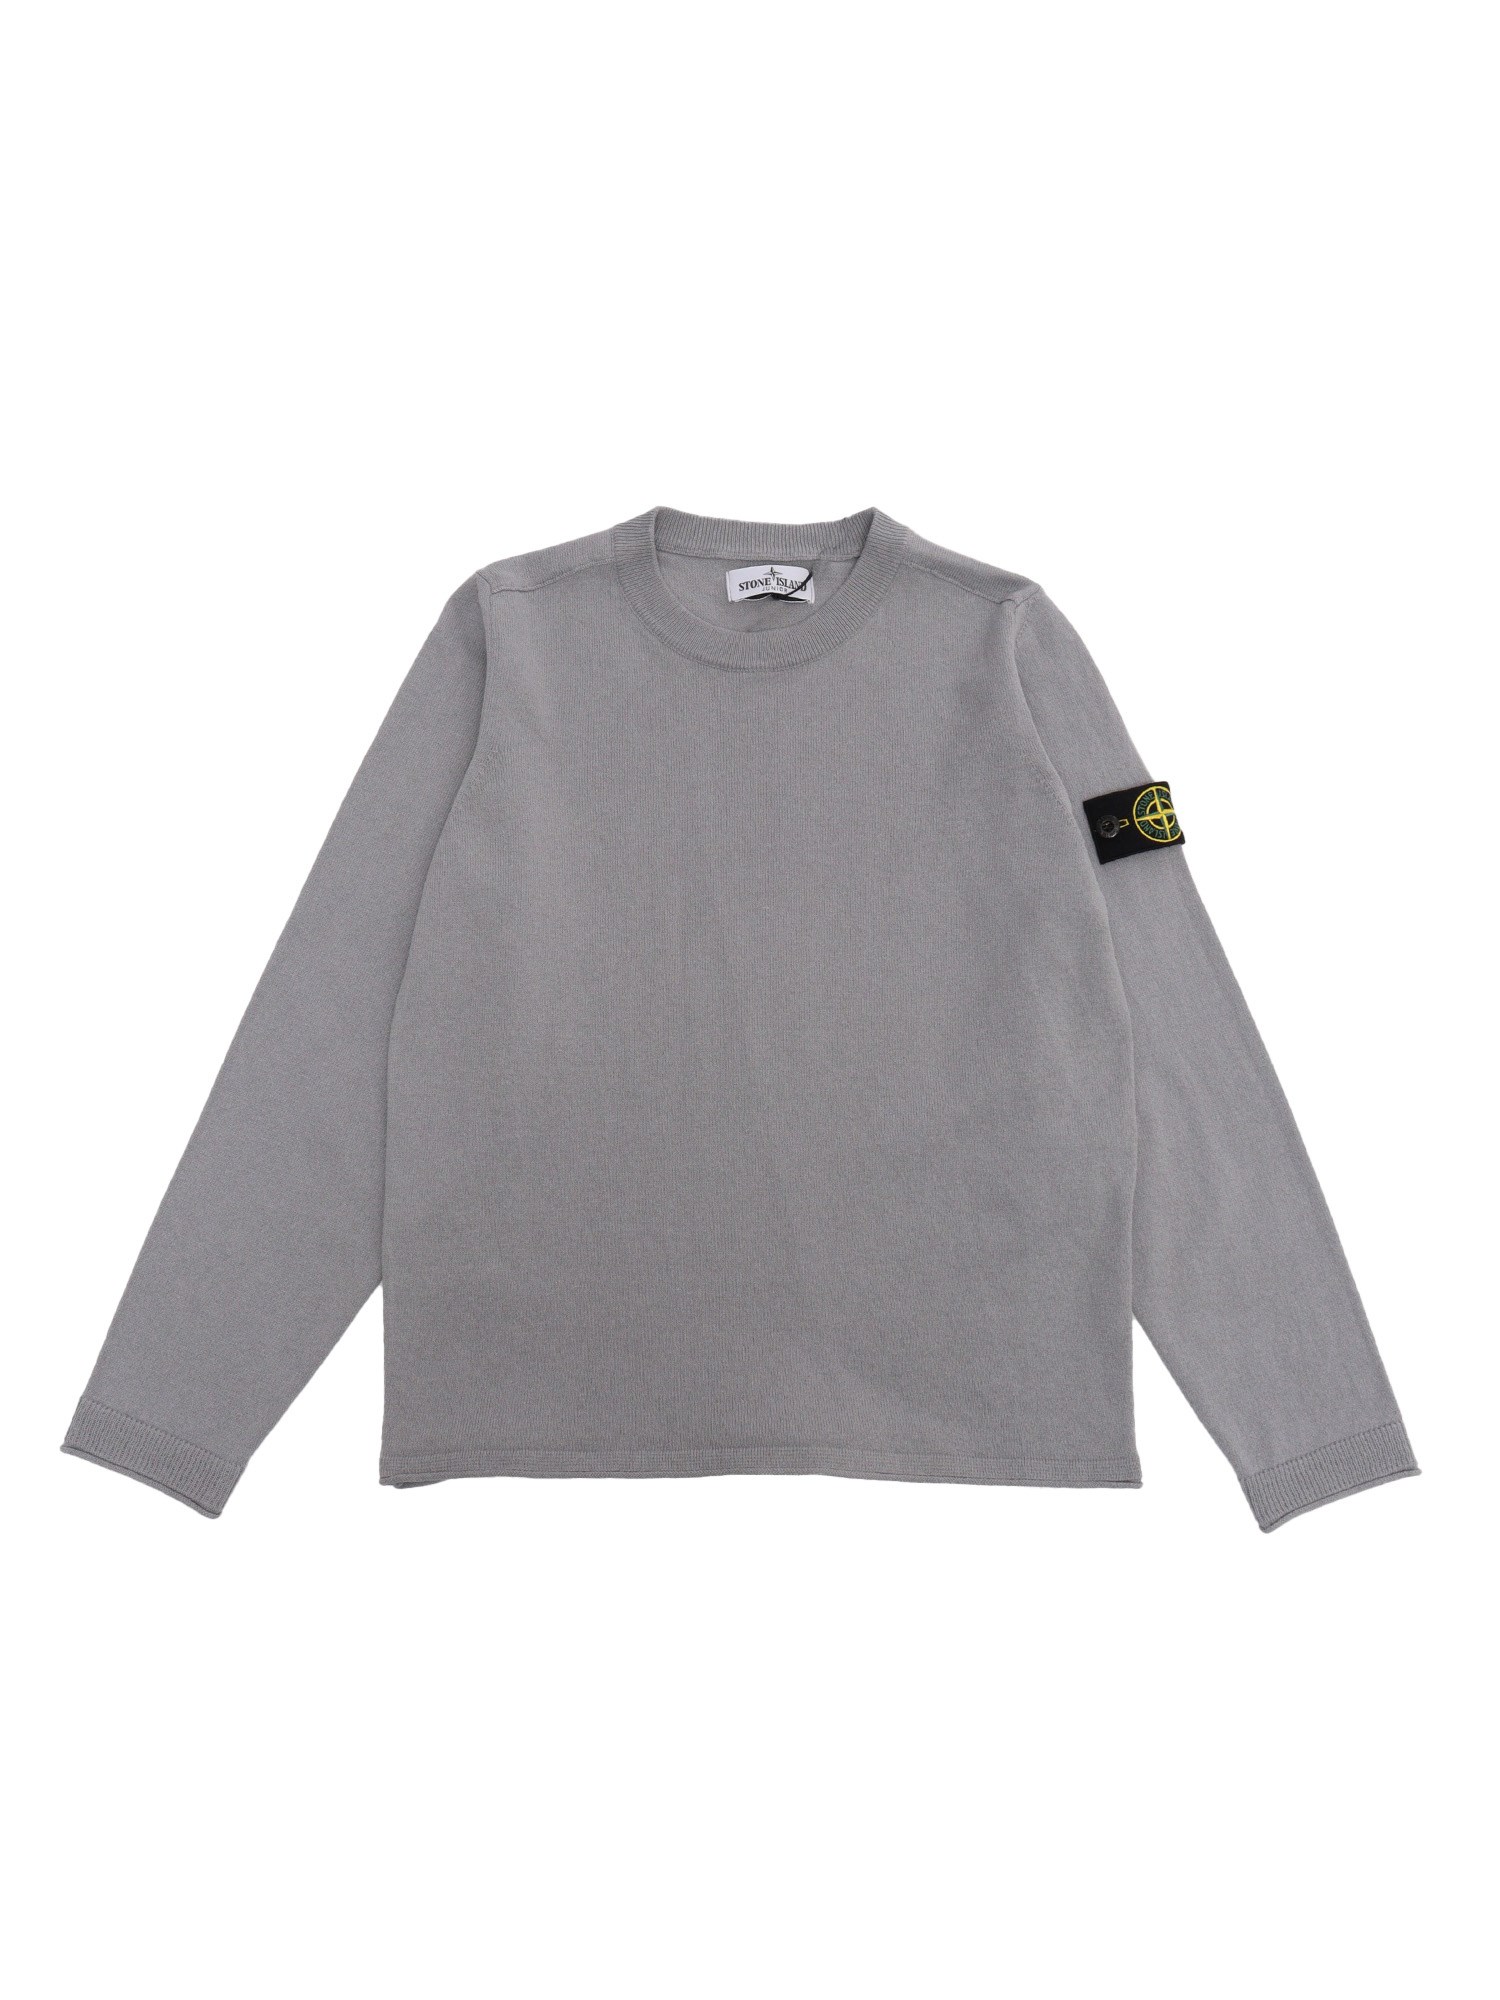 Stone Island Grey Sweater In Gray